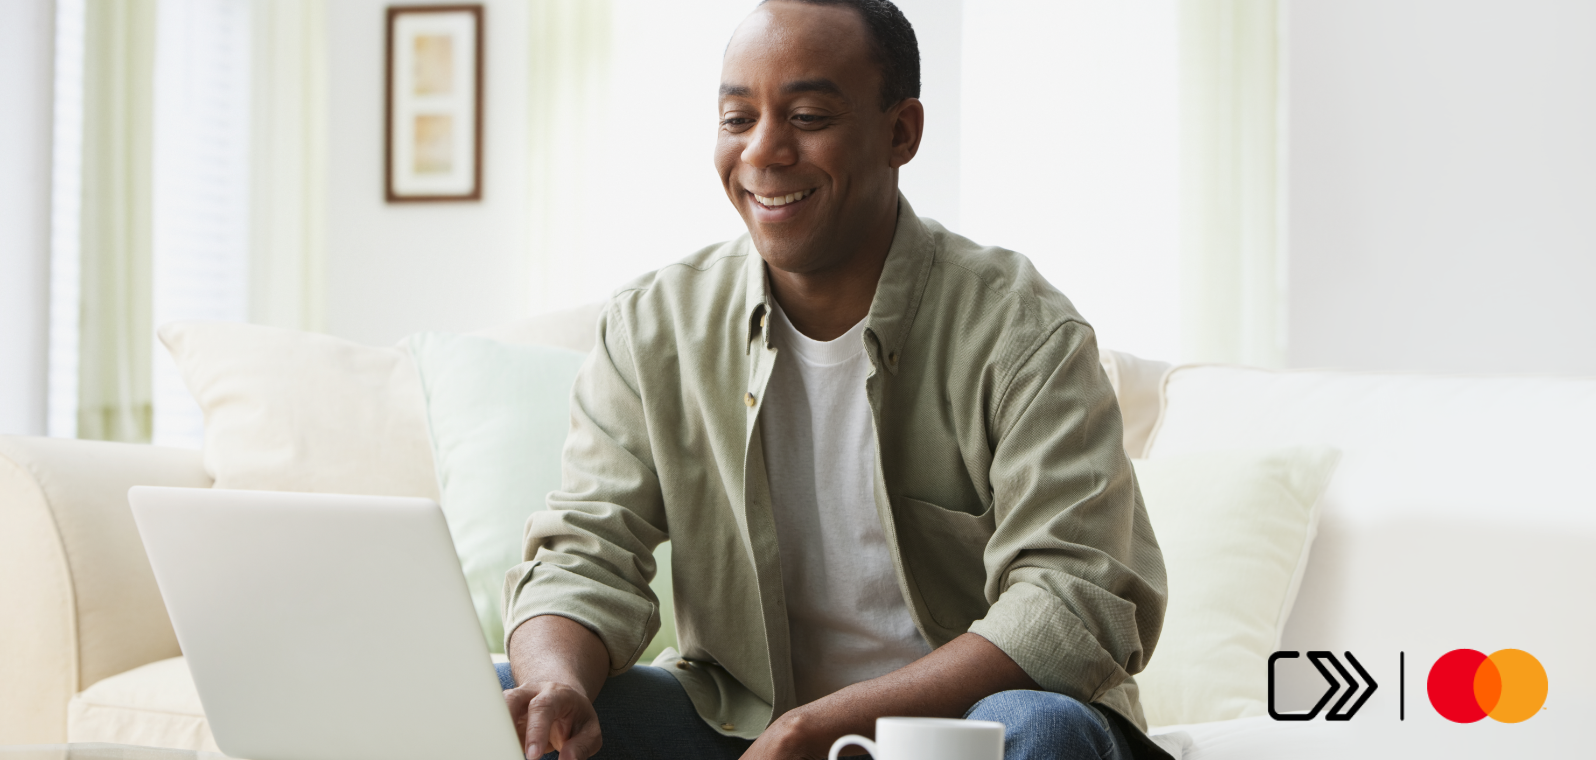 A smiling man shops online using a laptop.